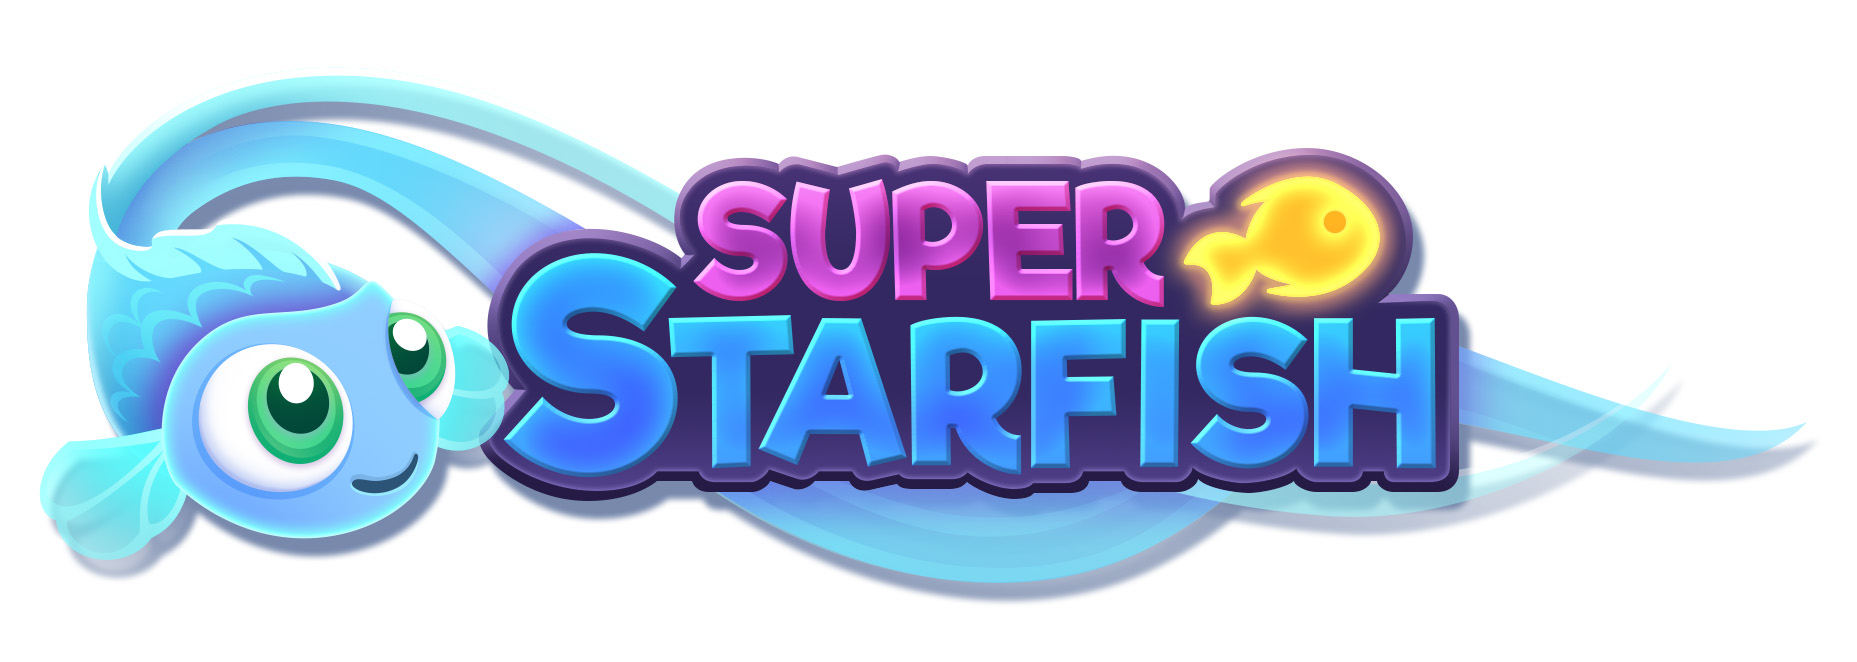 Super starfish игра. Игра супер Старфиш. Super Starfish рыбы. Игра супер Старфиш обновление. Супер Старфиш ползуны.